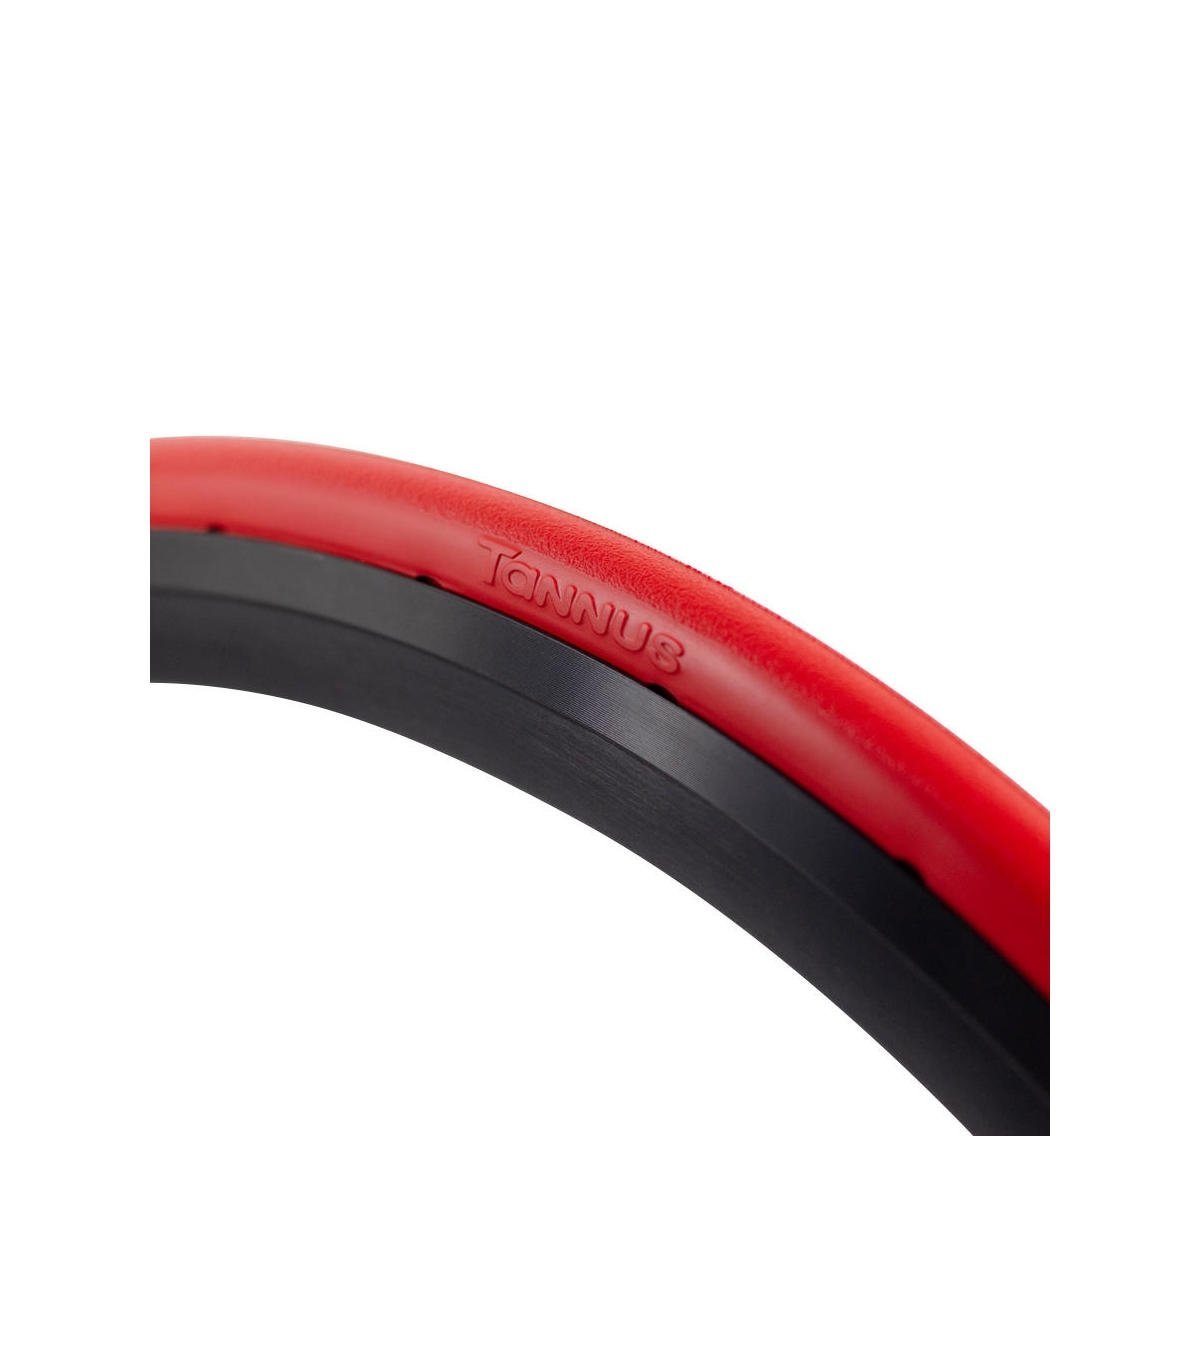 Cubierta Slick 700 * 23c (23-622) Hard Tannus Airless Tire - rojo - 